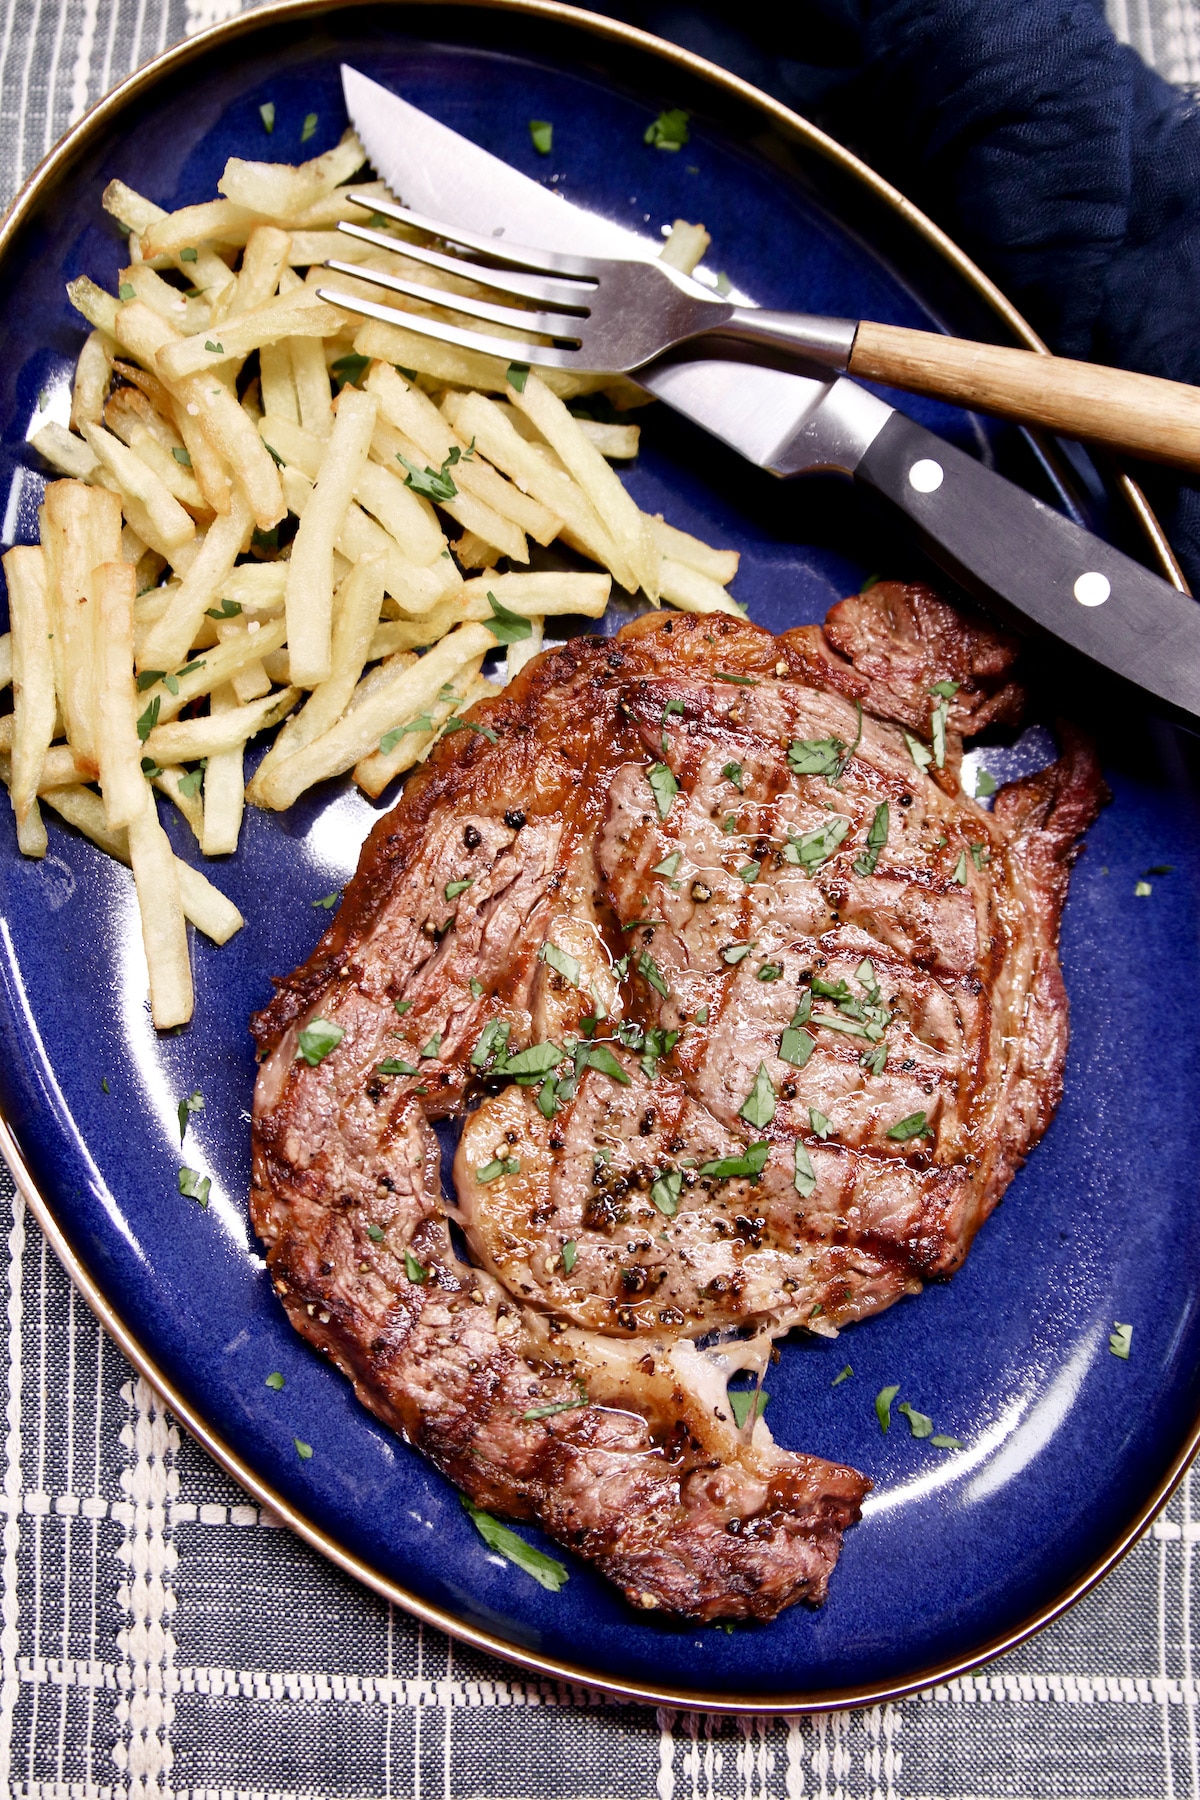 Grilled steak and fries on a blue platter, fork & knife.